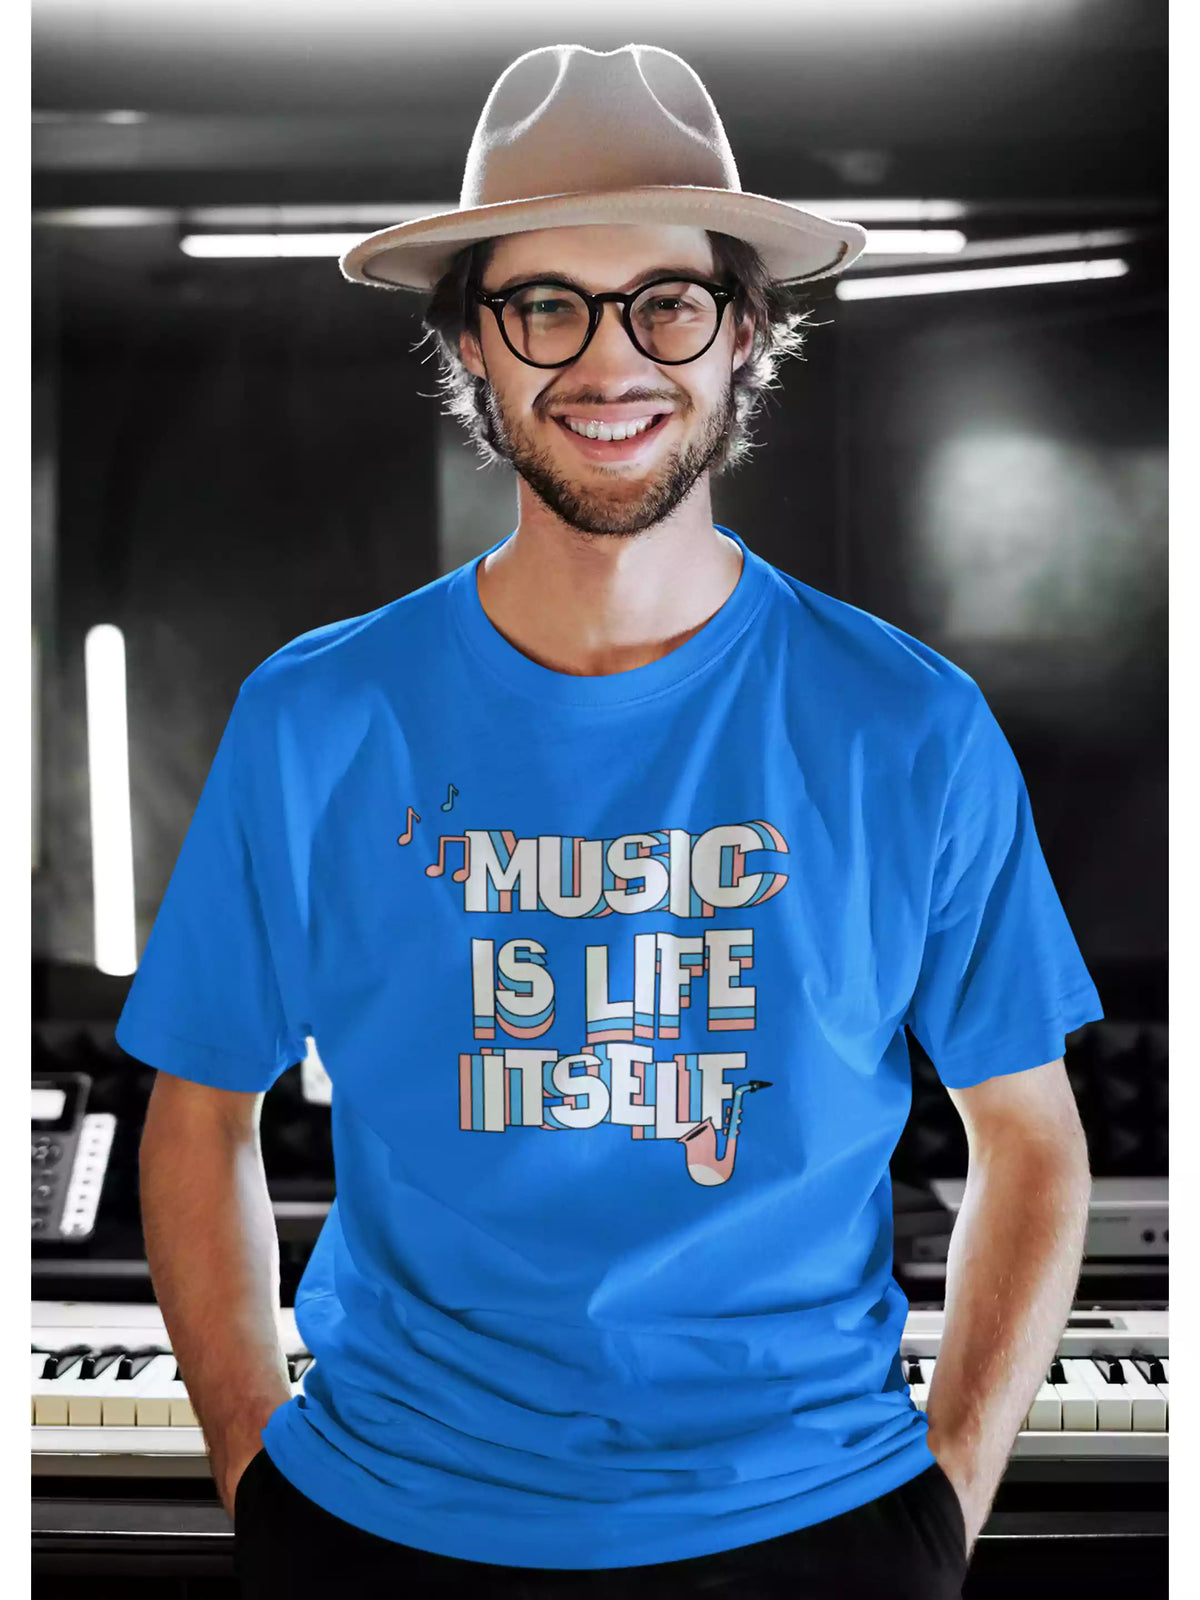 Life Itself - Sukhiaatma Unisex Graphic Printed T-shirt